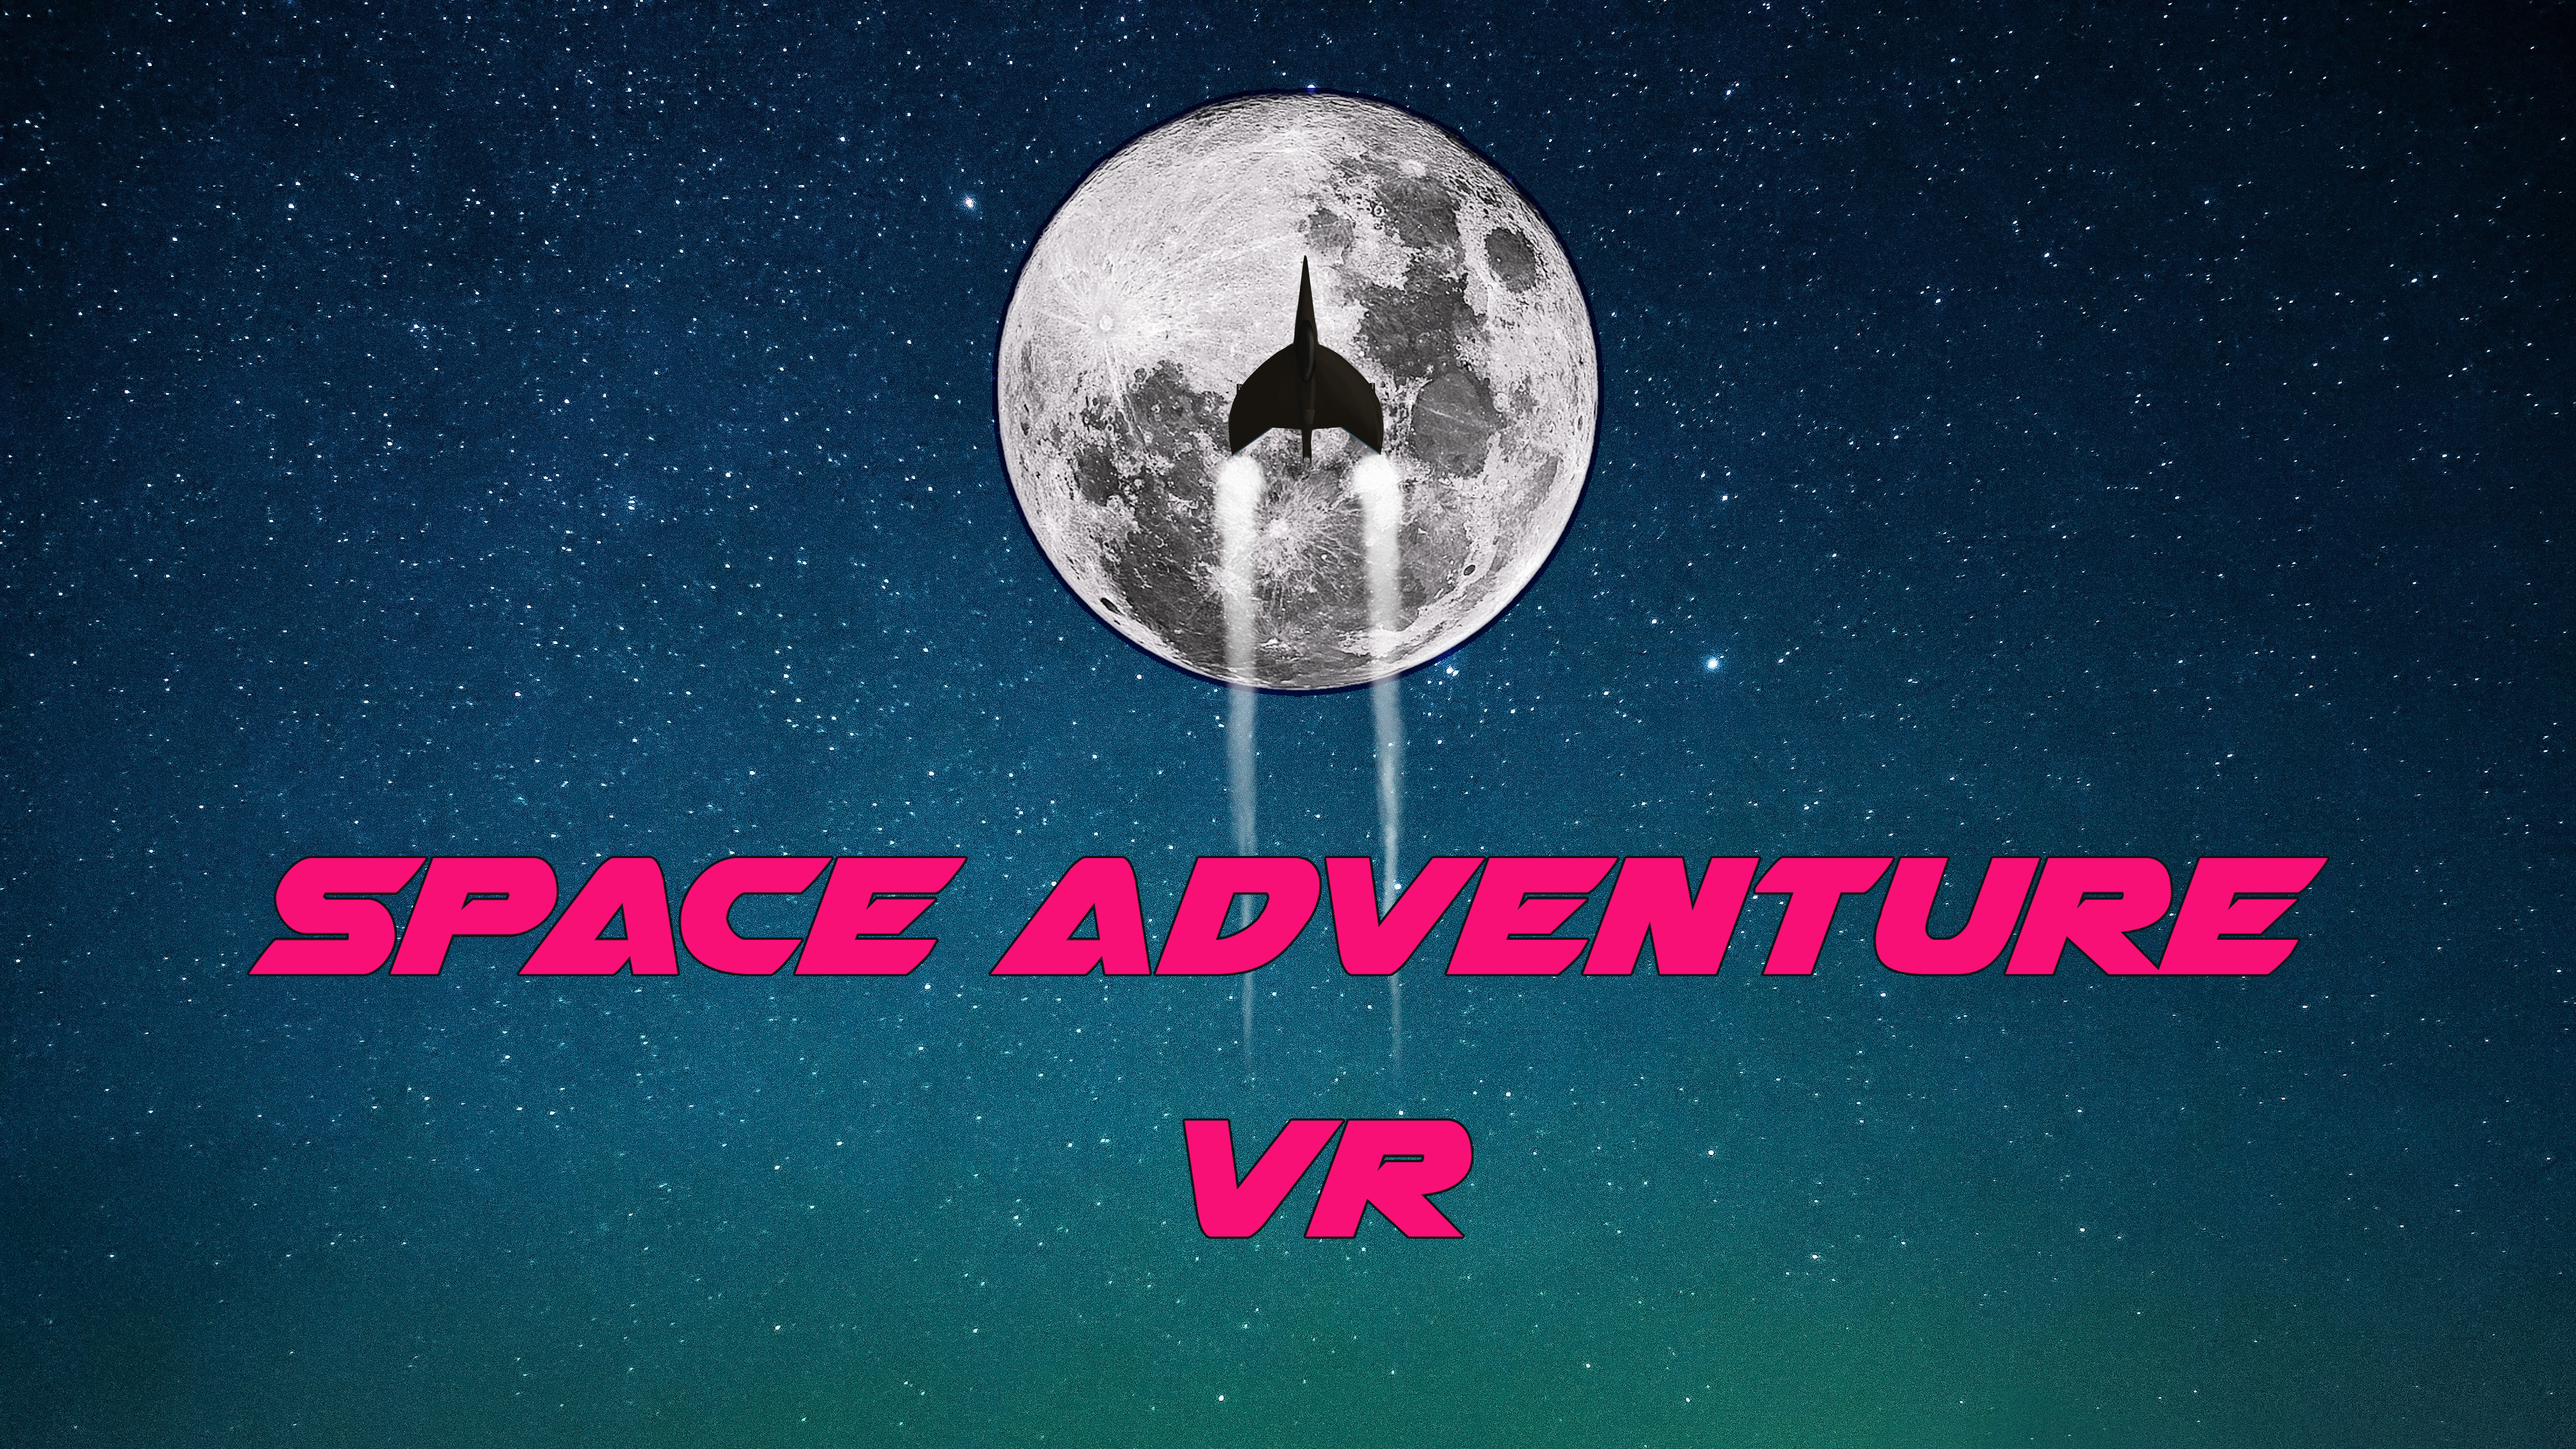 Space Adventure VR Mobile Demo